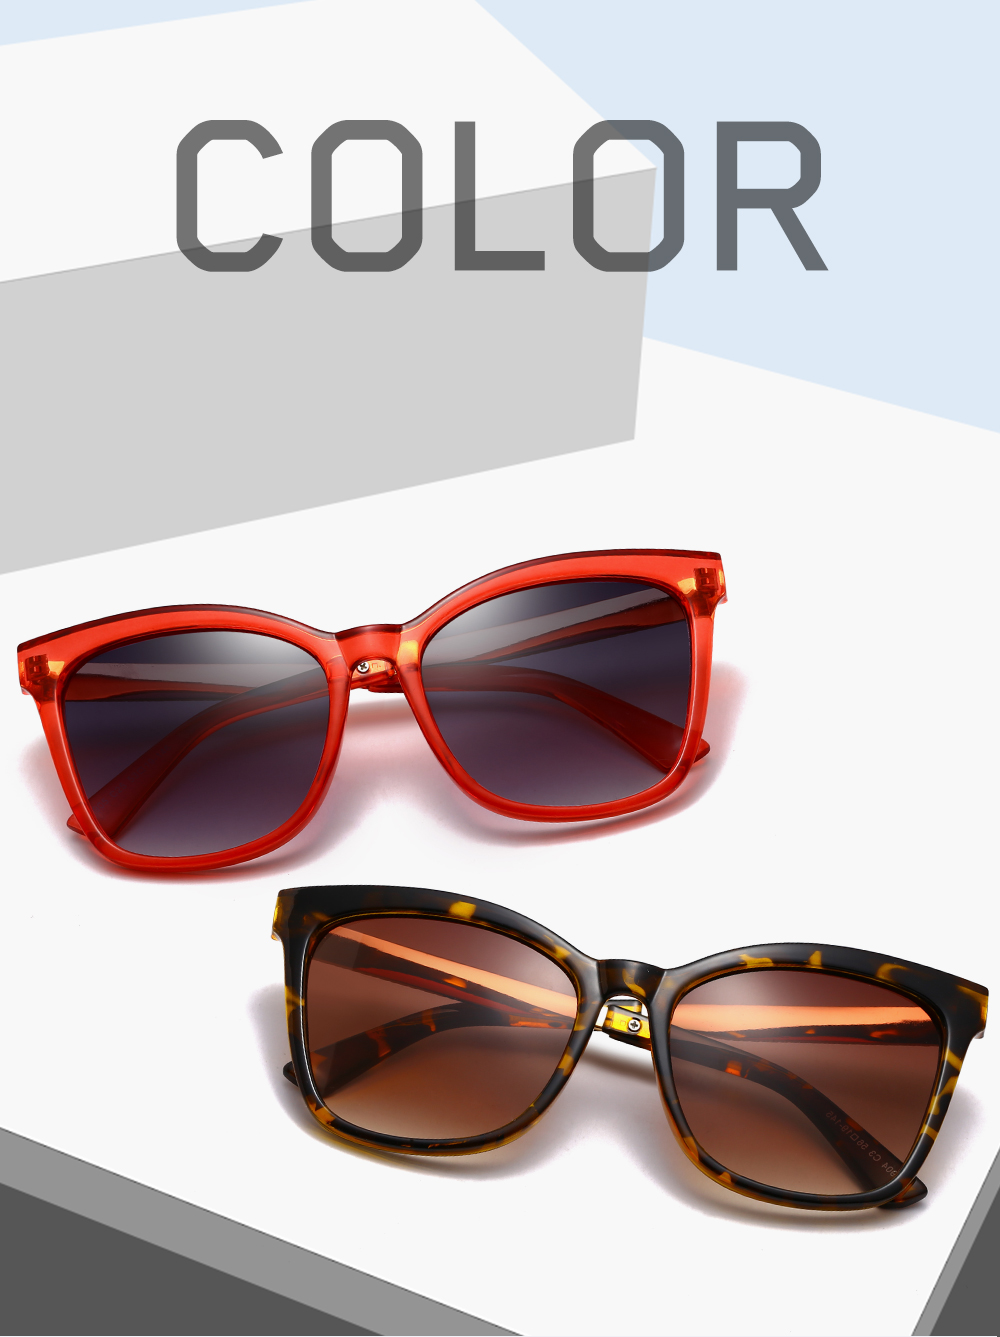 Sunglass Manufacturers in China - UV400 Sunglasses for Women